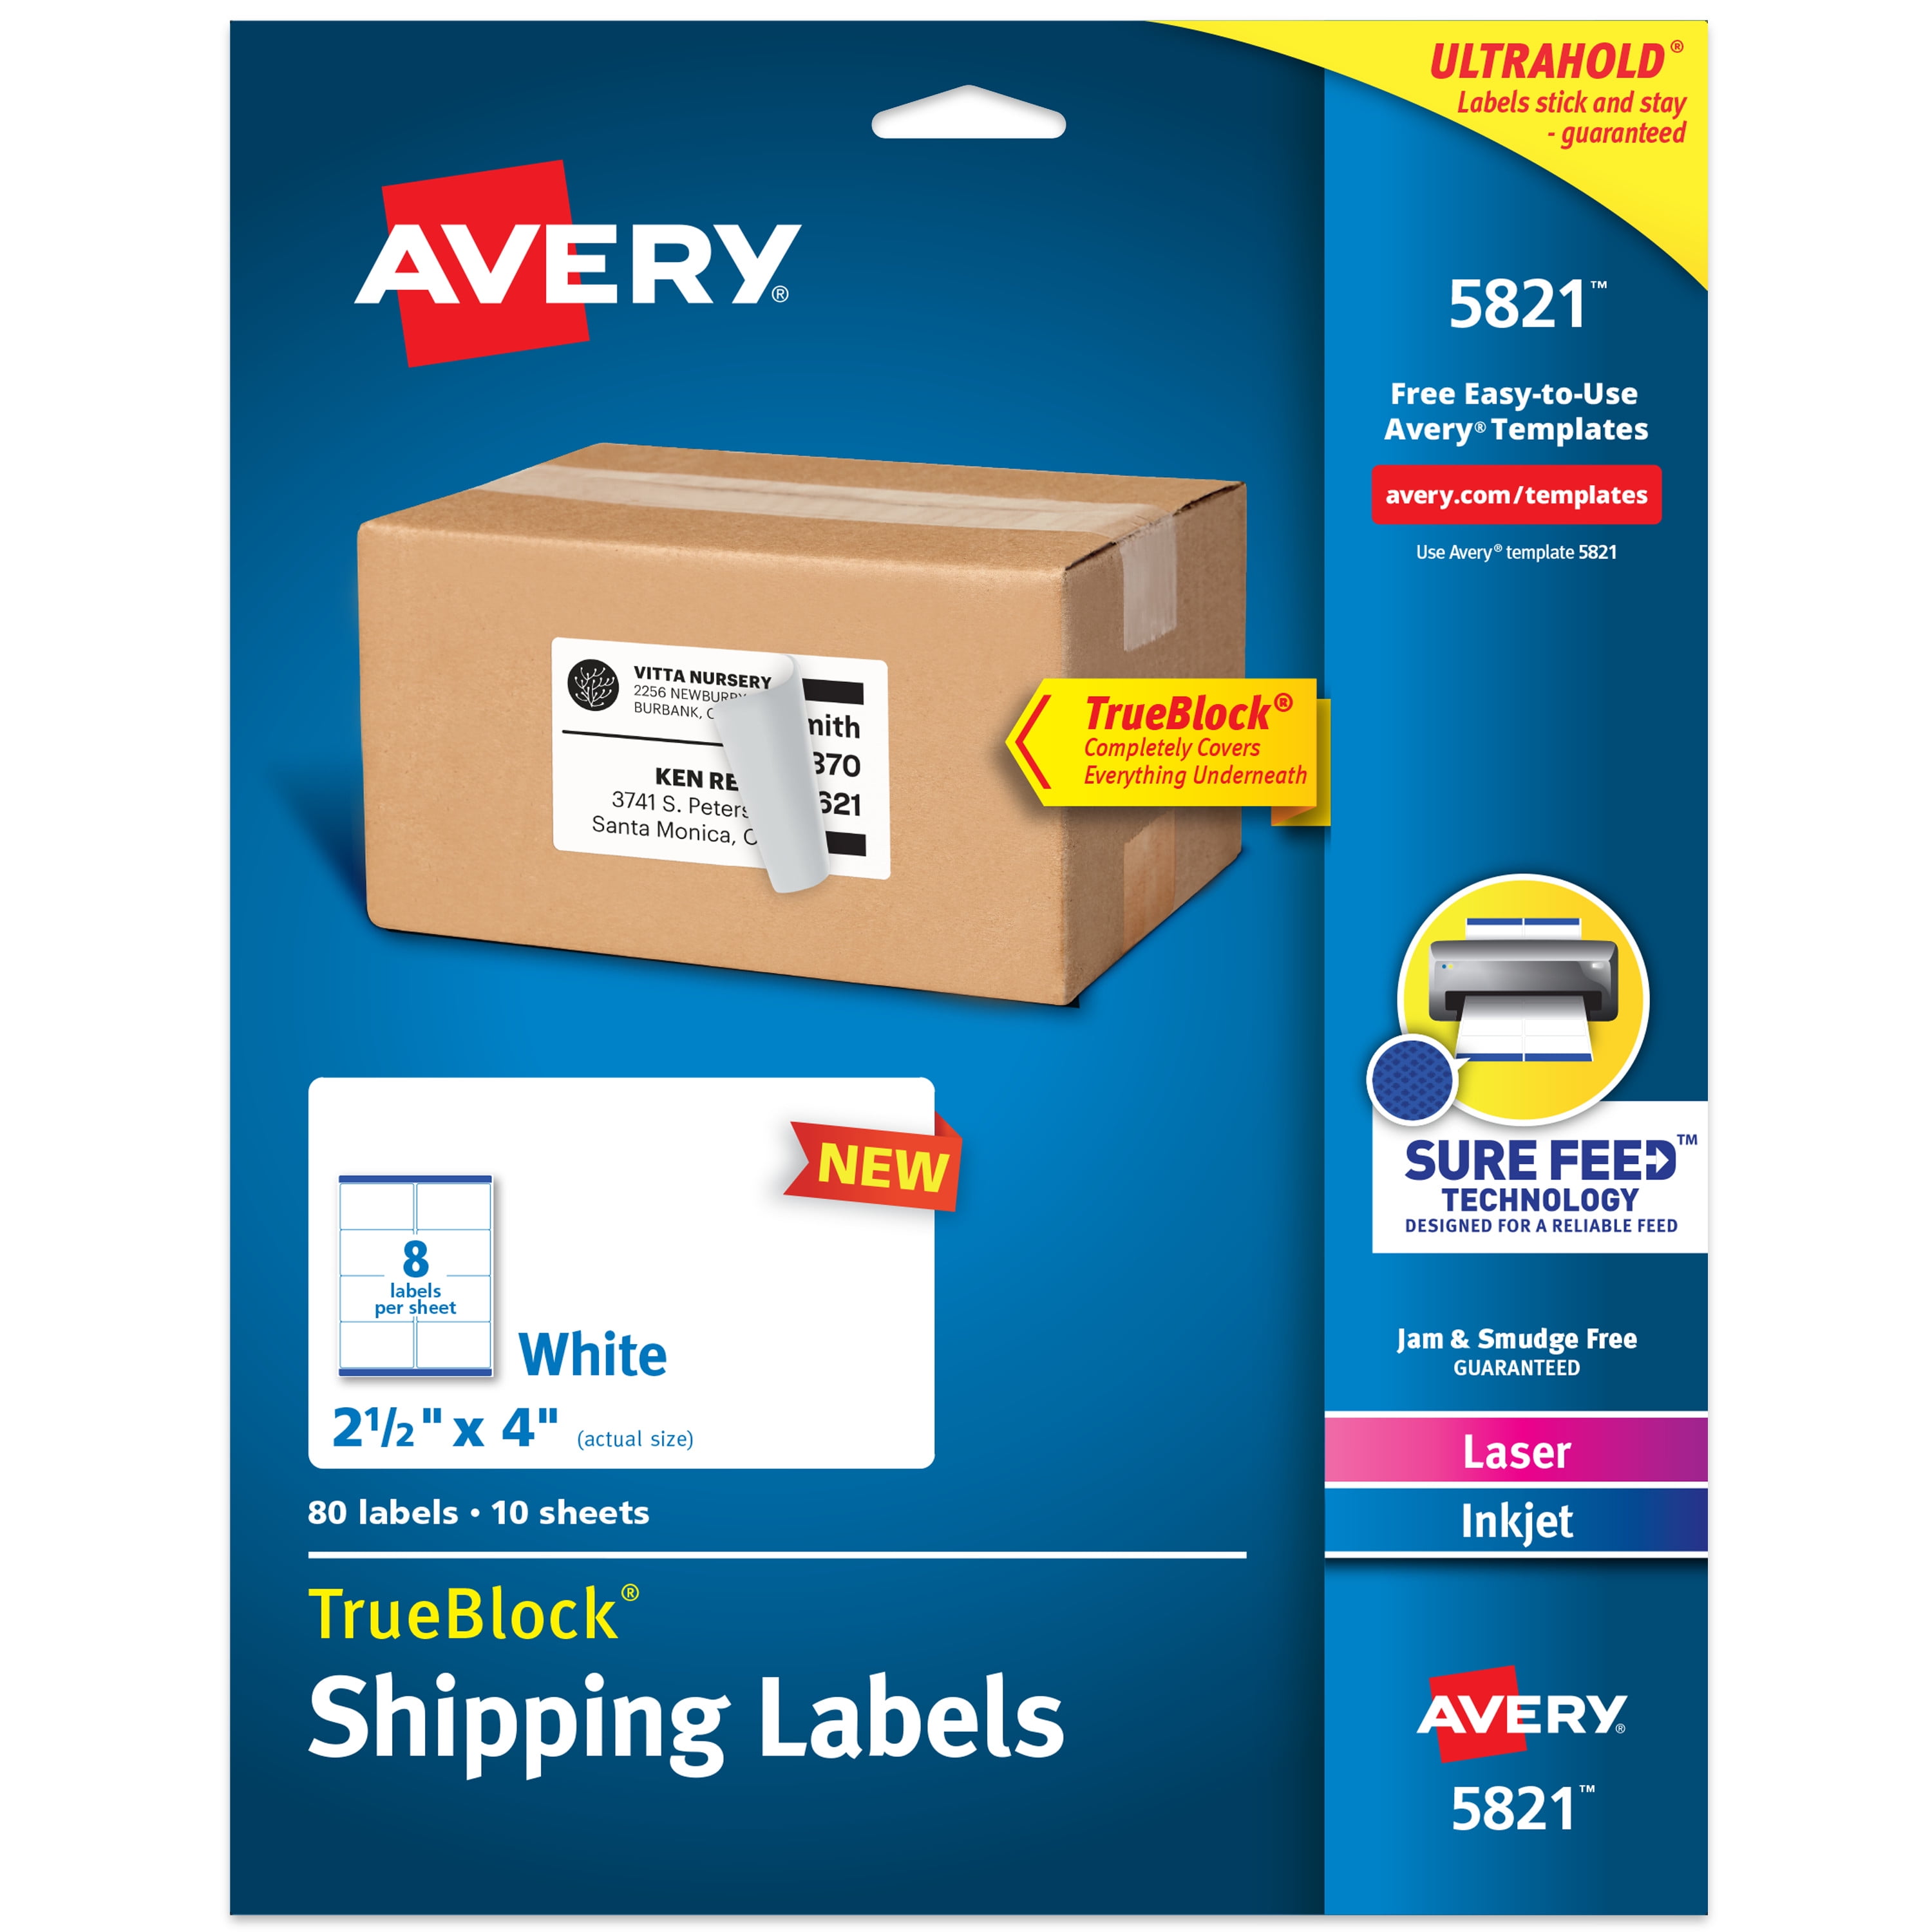 Avery Dennison 5165 Label for sale online 